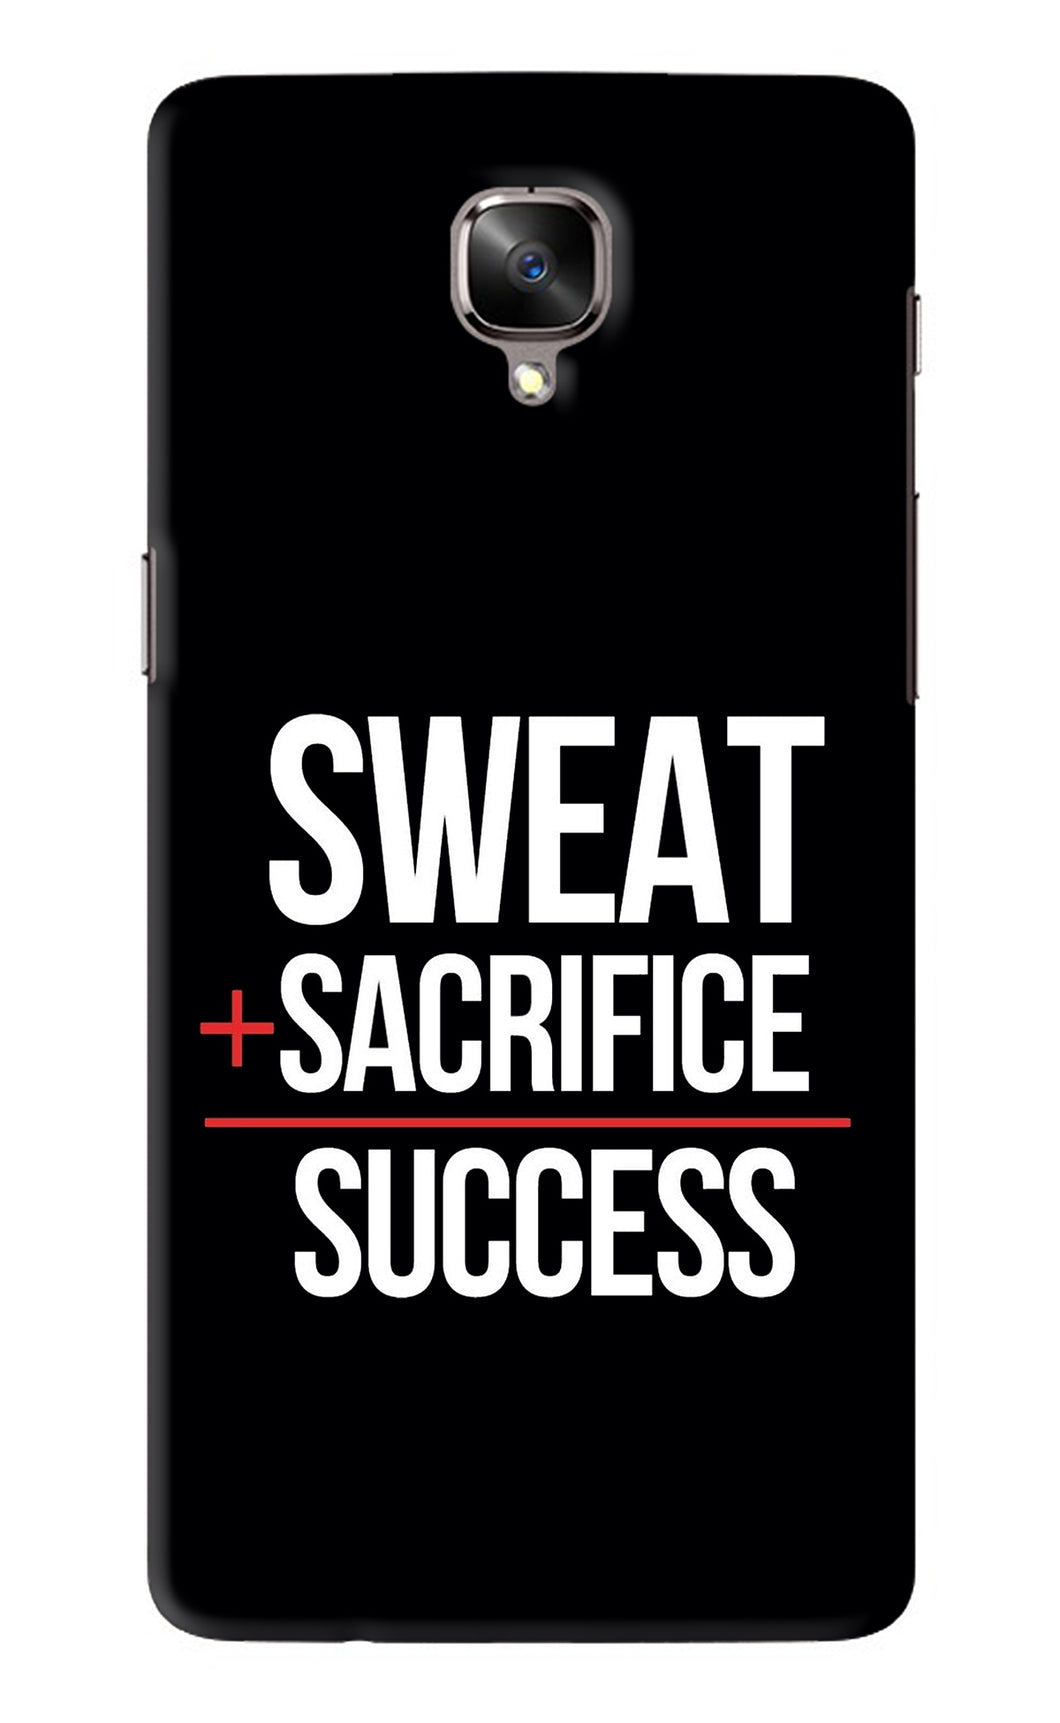 Sweat Sacrifice Success OnePlus 3T Back Skin Wrap